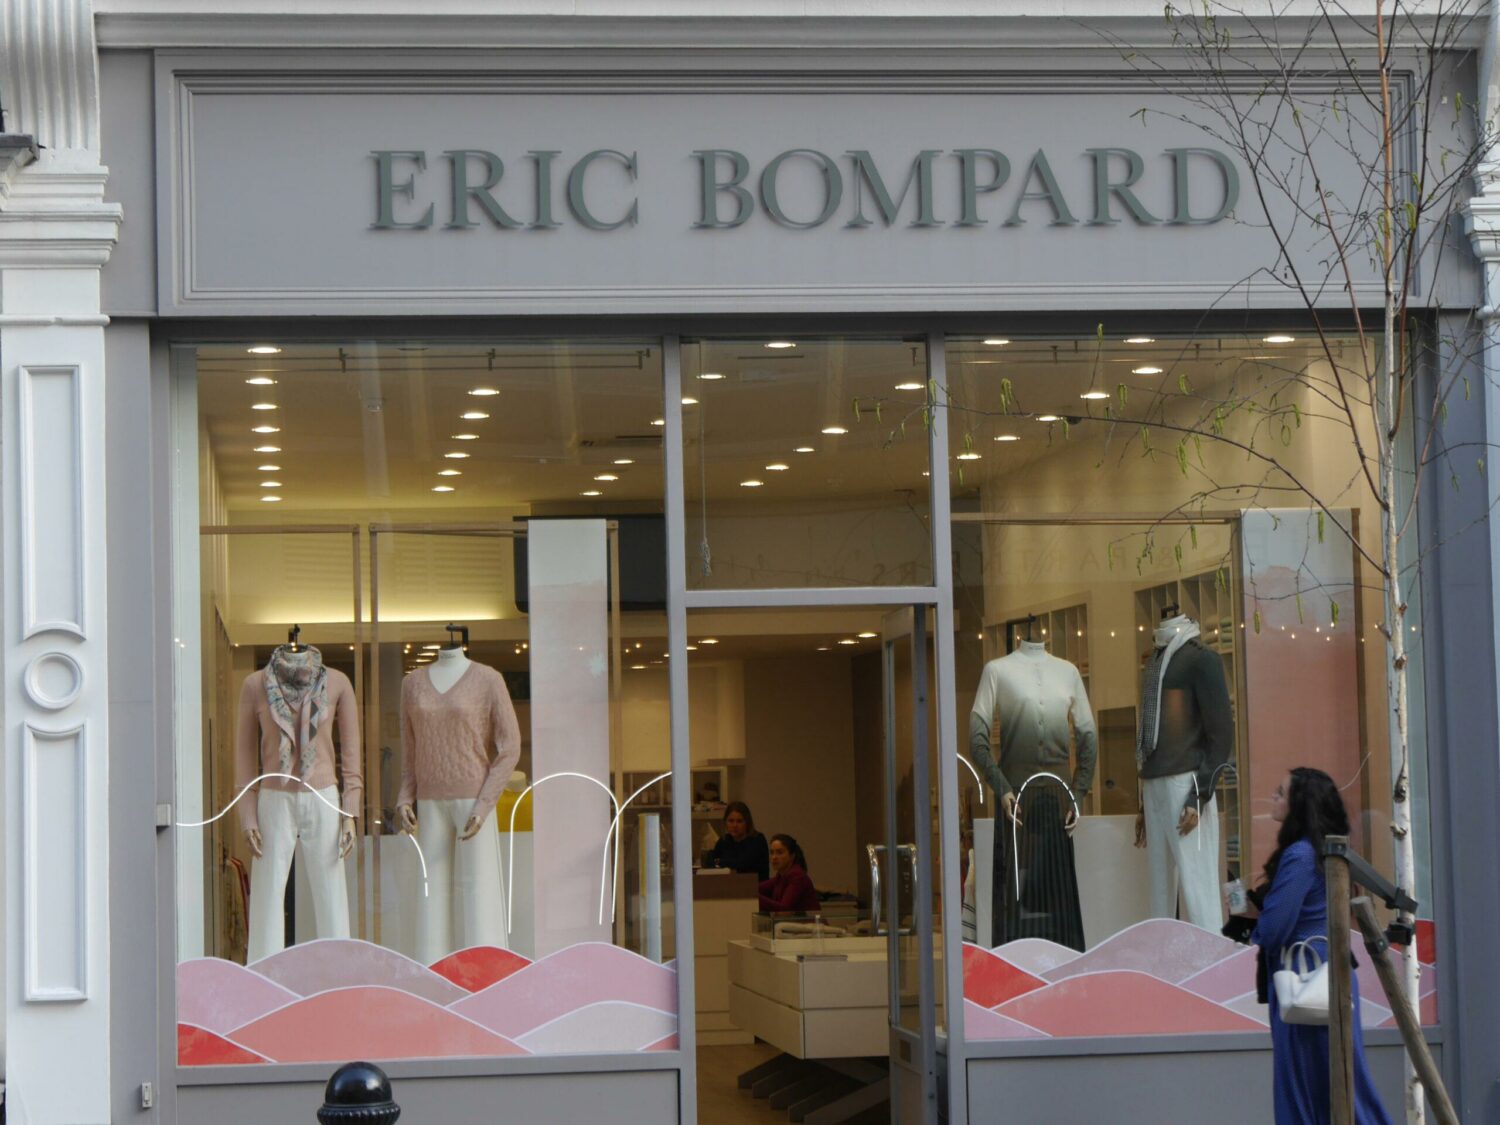 Eric Bompard announced as new tenant on Hampstead High Street